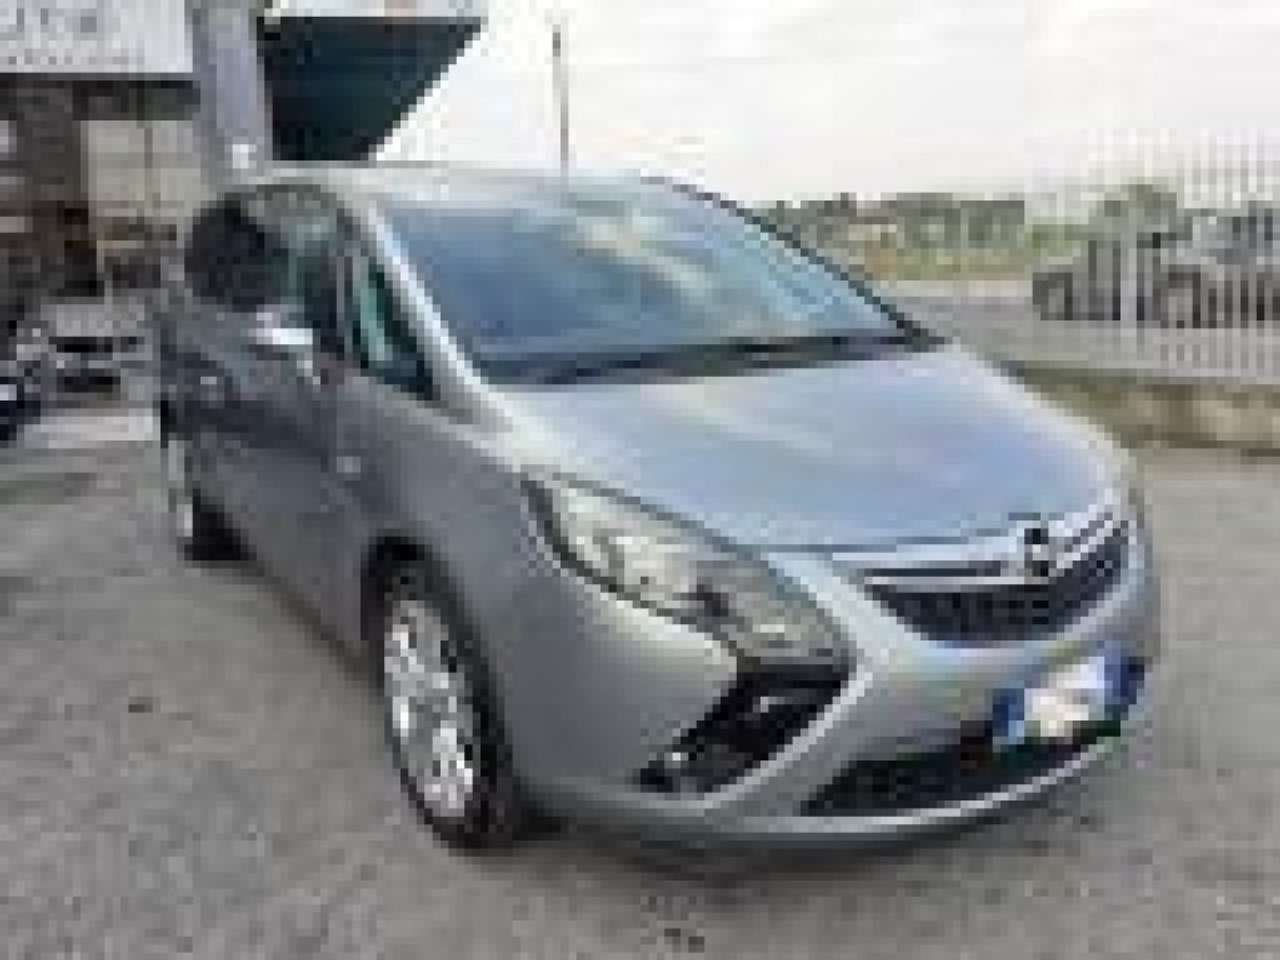 Opel Zafira Tourer 2.0 CDTi 130CV Cosmo